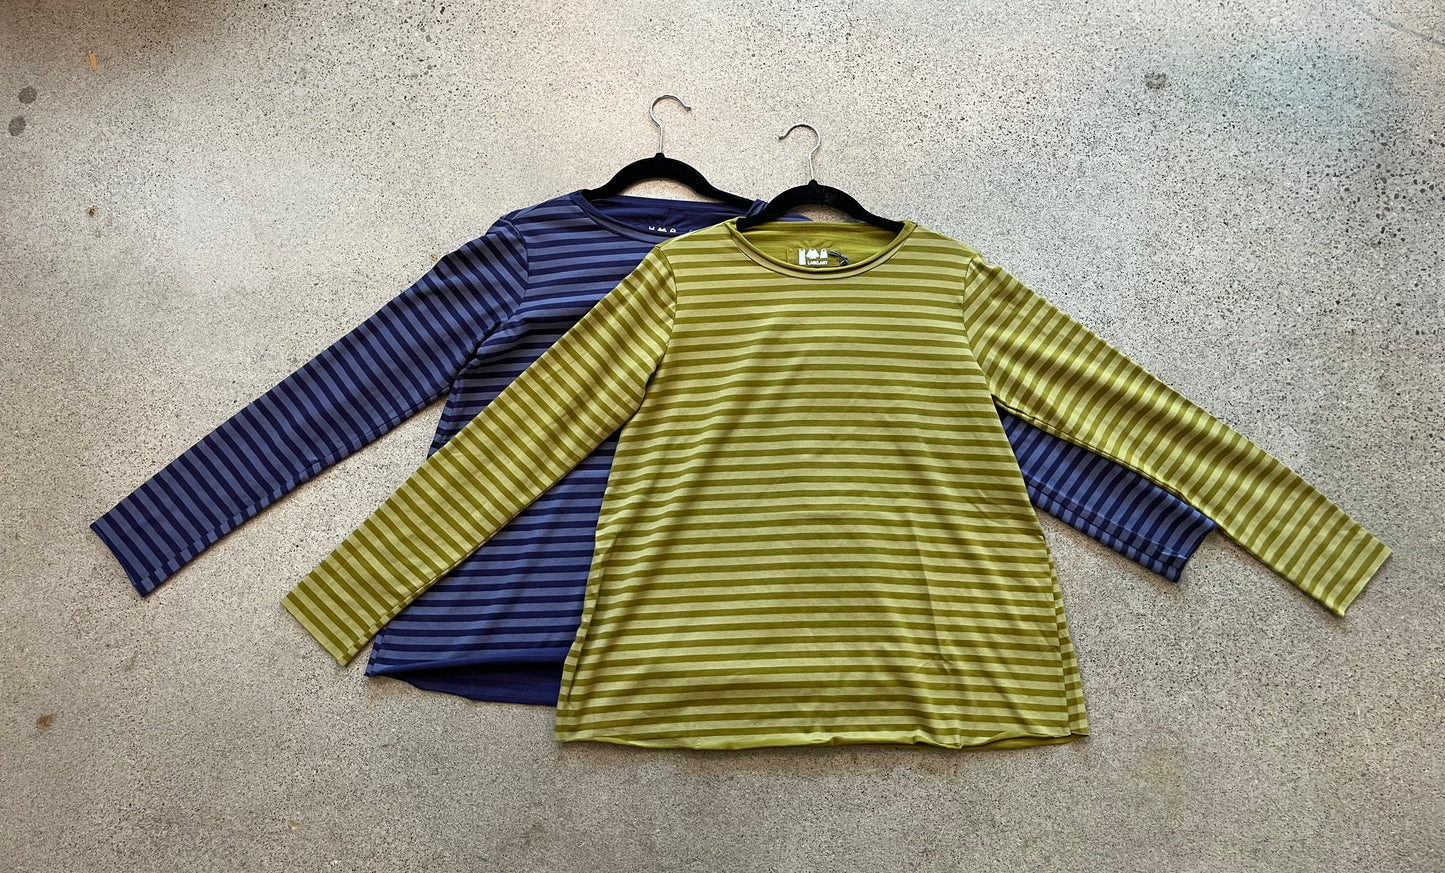 Labo Art - Magnolia Jeppe Striped Tee Shirt Daino in Lizard or Indigo